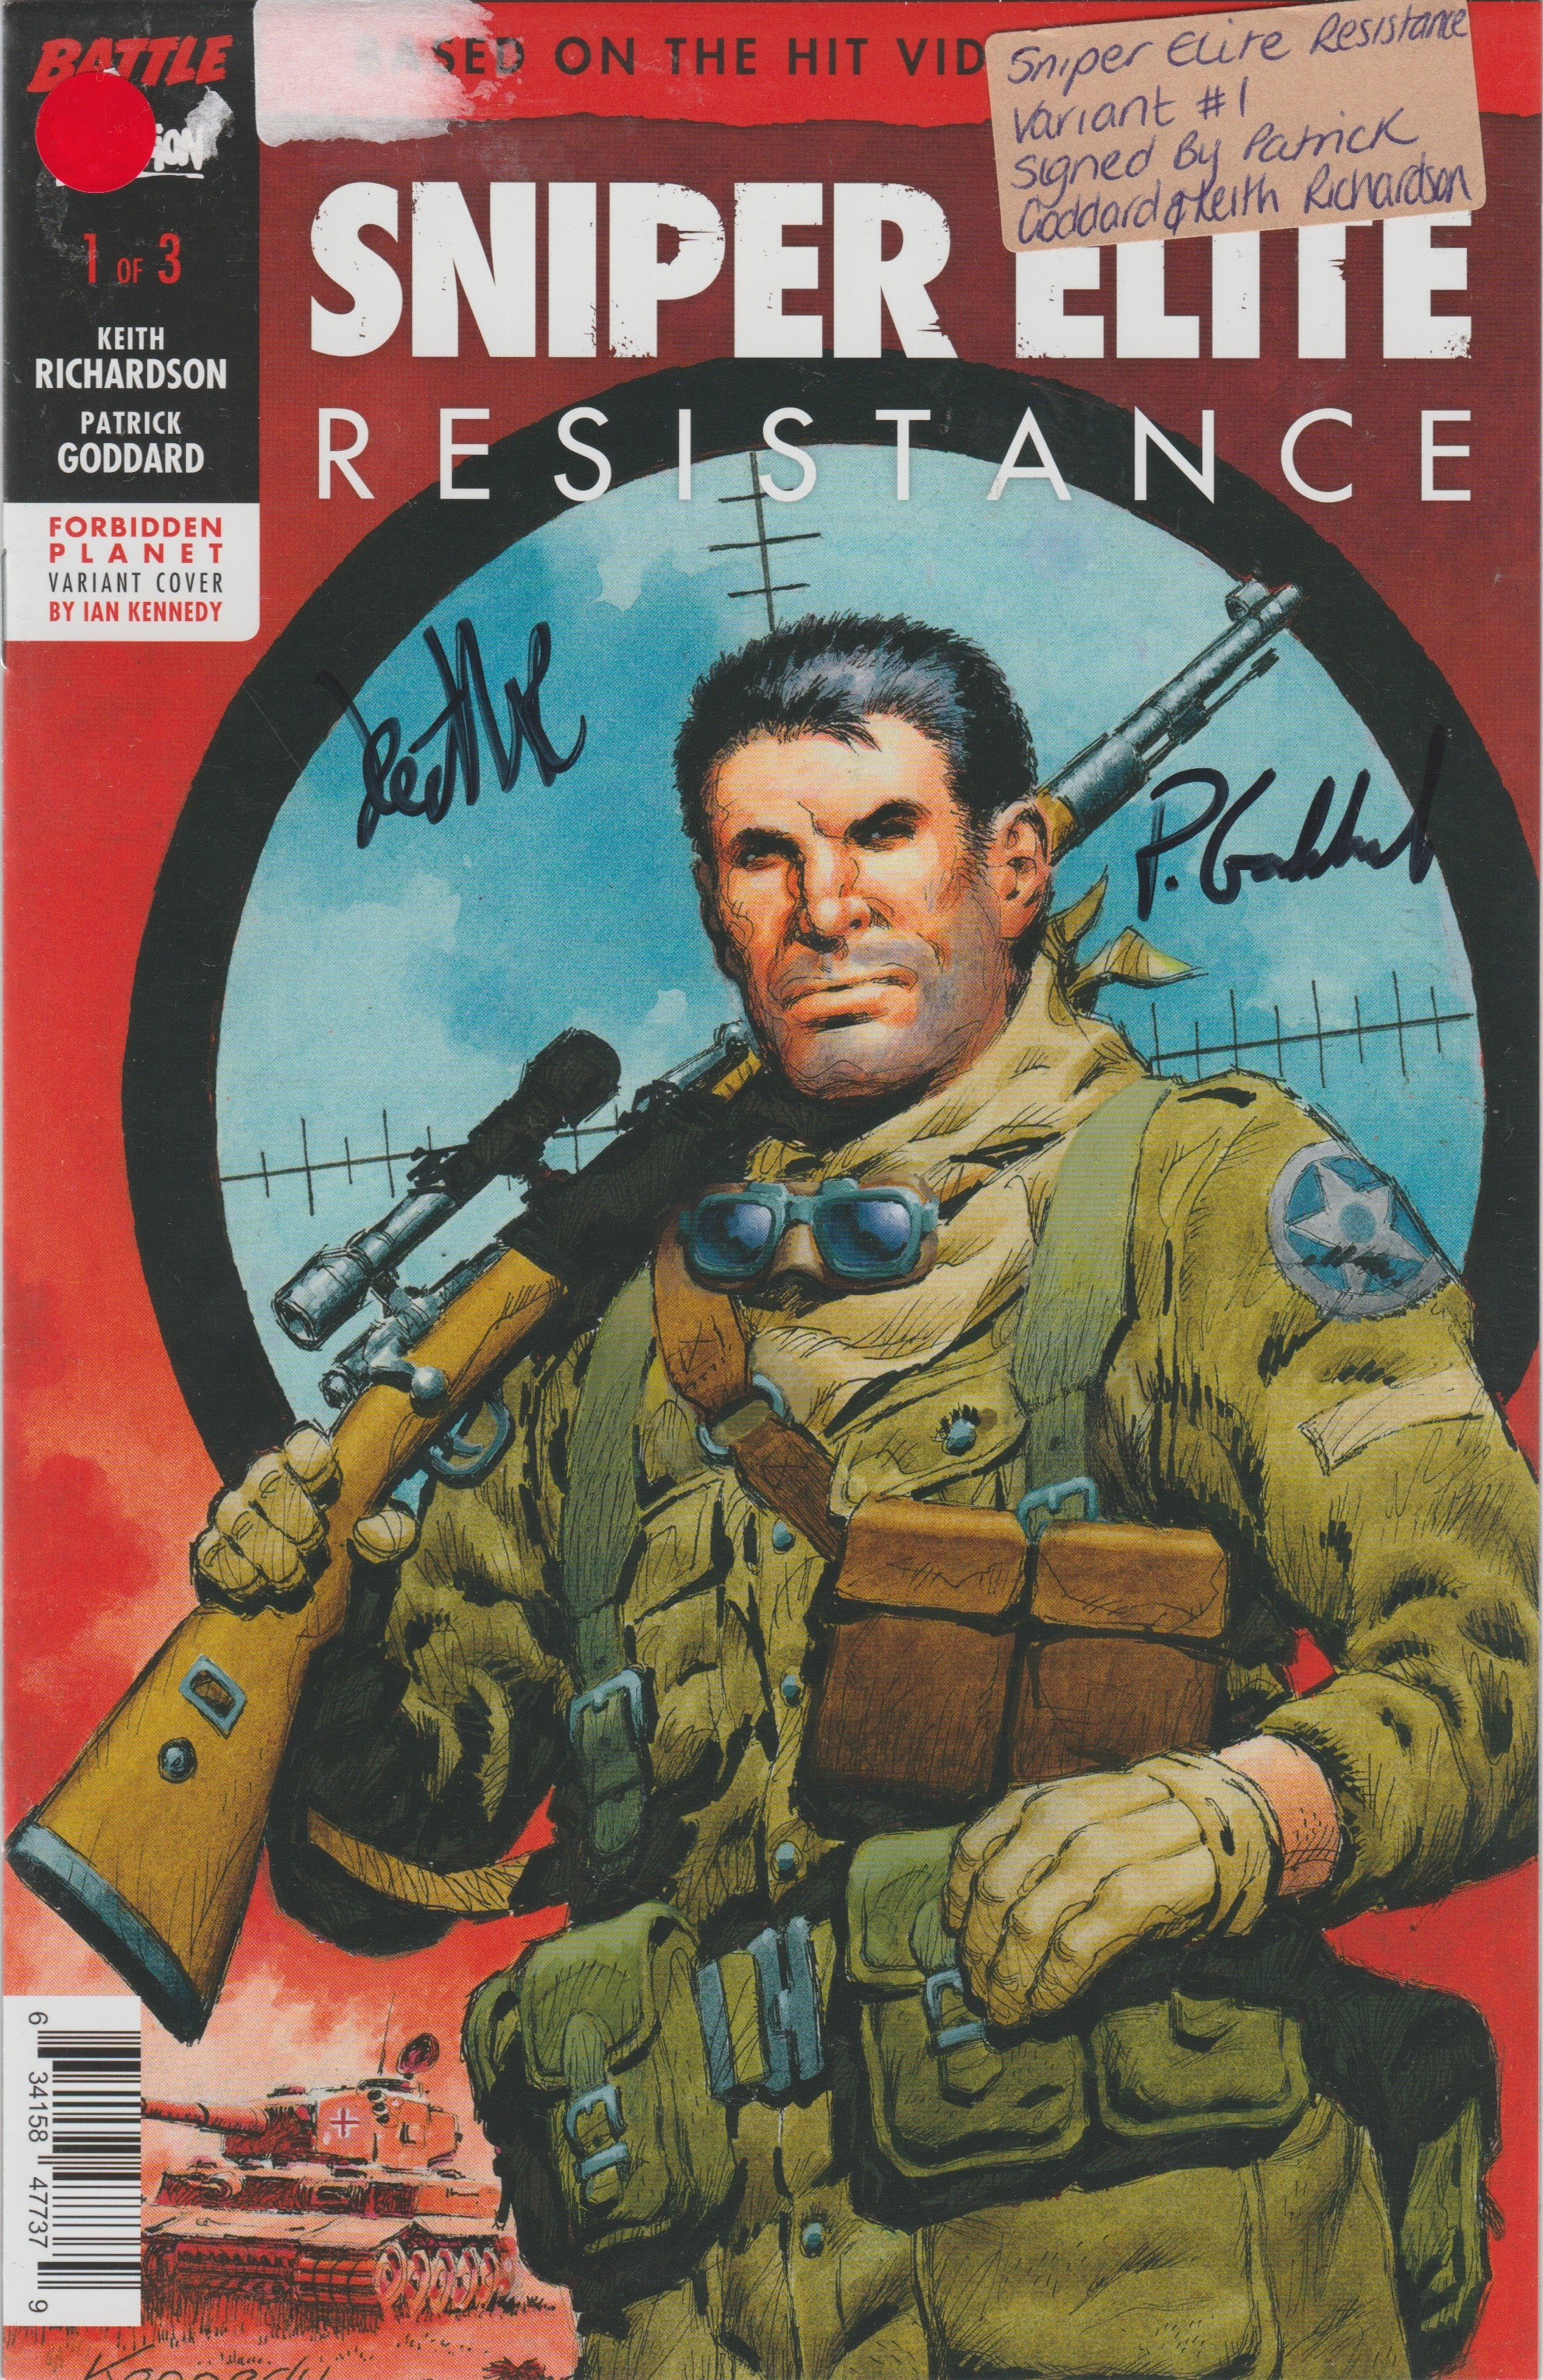 Sniper Elite: A Resistência, de Keith Richardson e Patrick Goddard